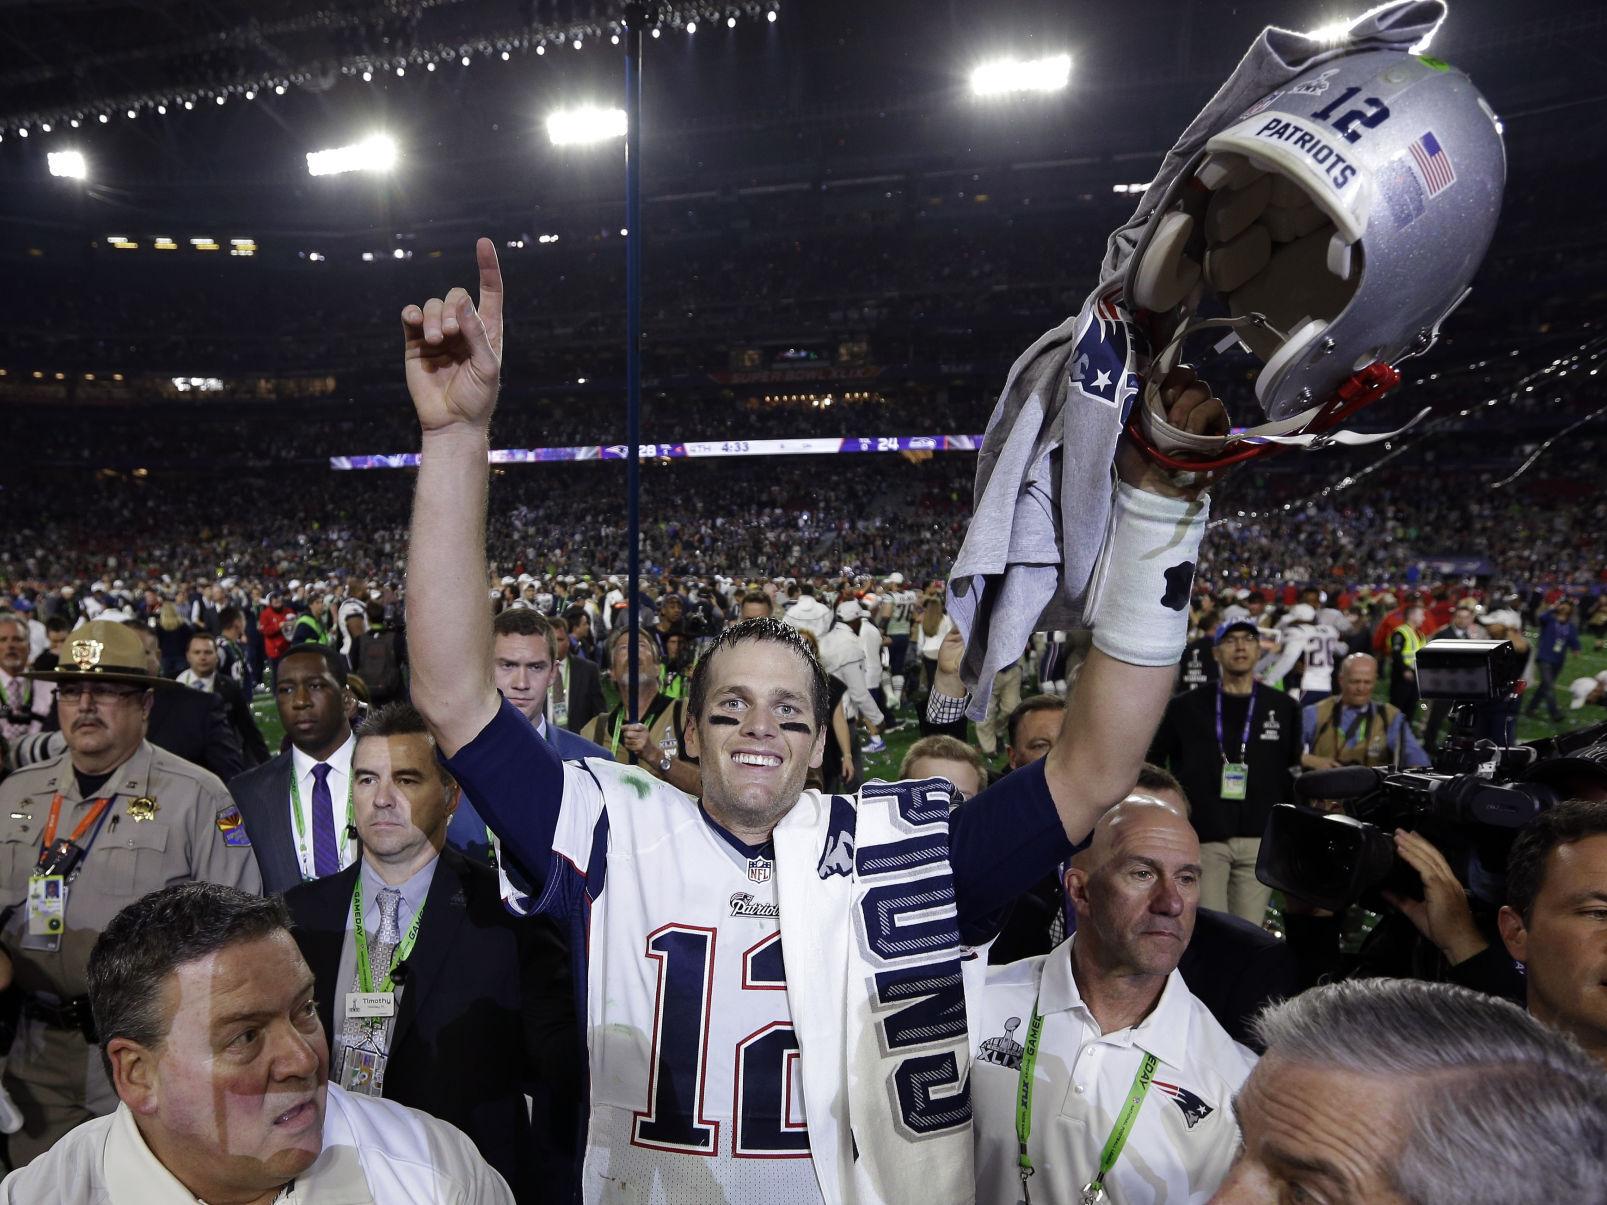 49. Super Bowl XLIX: QB Tom Brady, New England Patriots